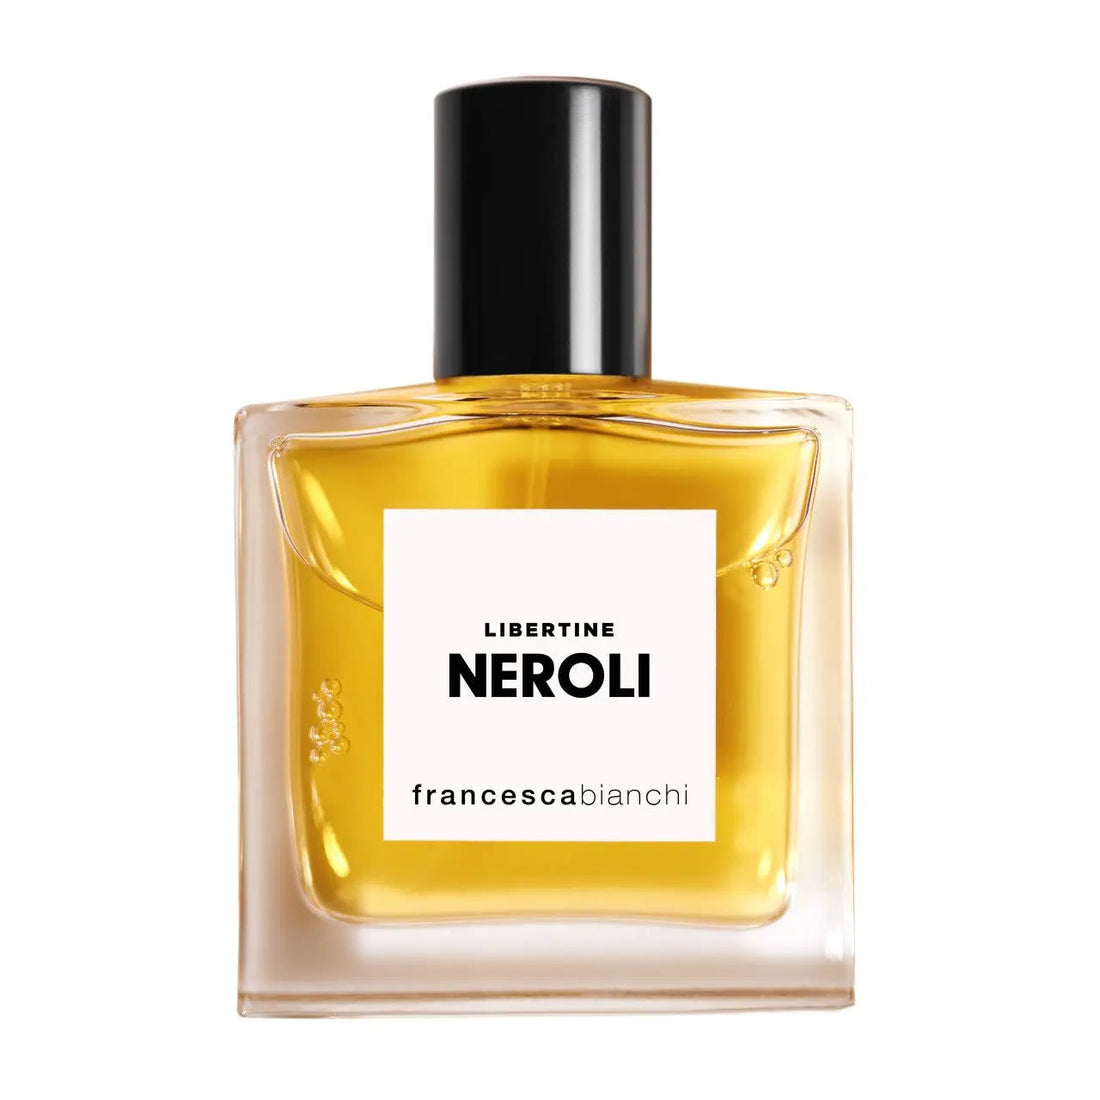 Extracto de perfume de neroli Libertine Francesca Bianchi - 30 ml